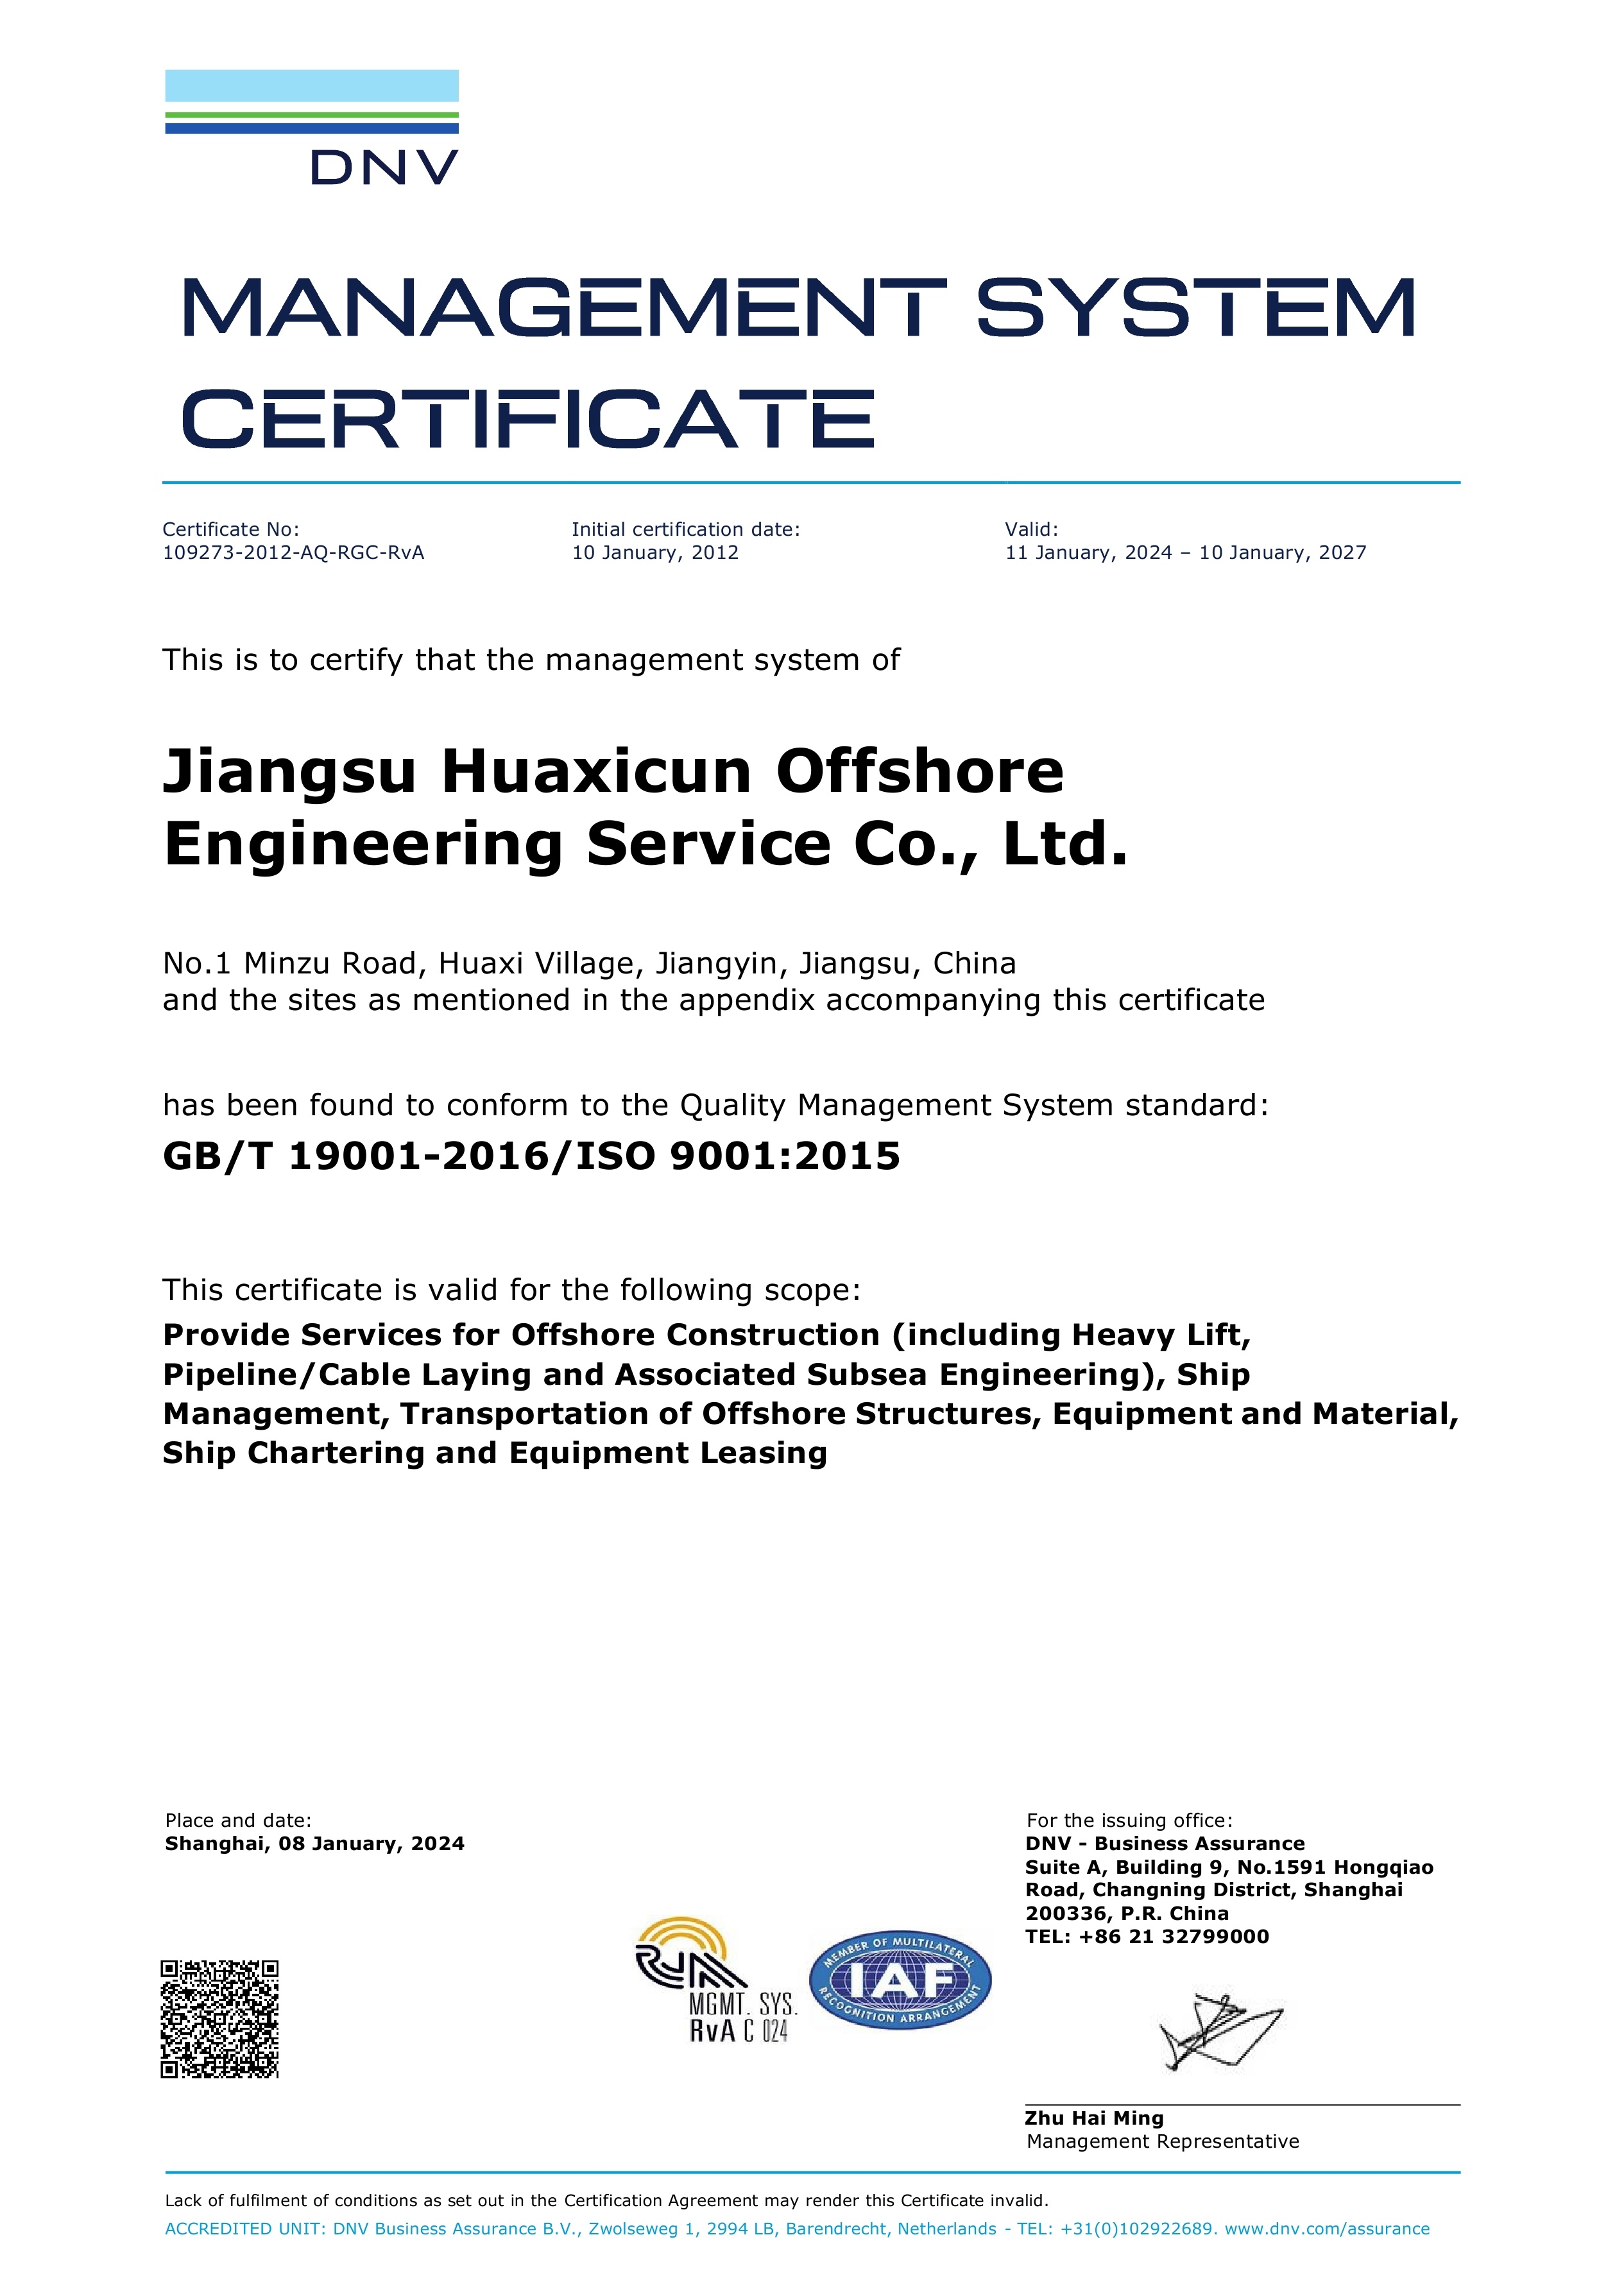 DNV Quality Management System Certificate